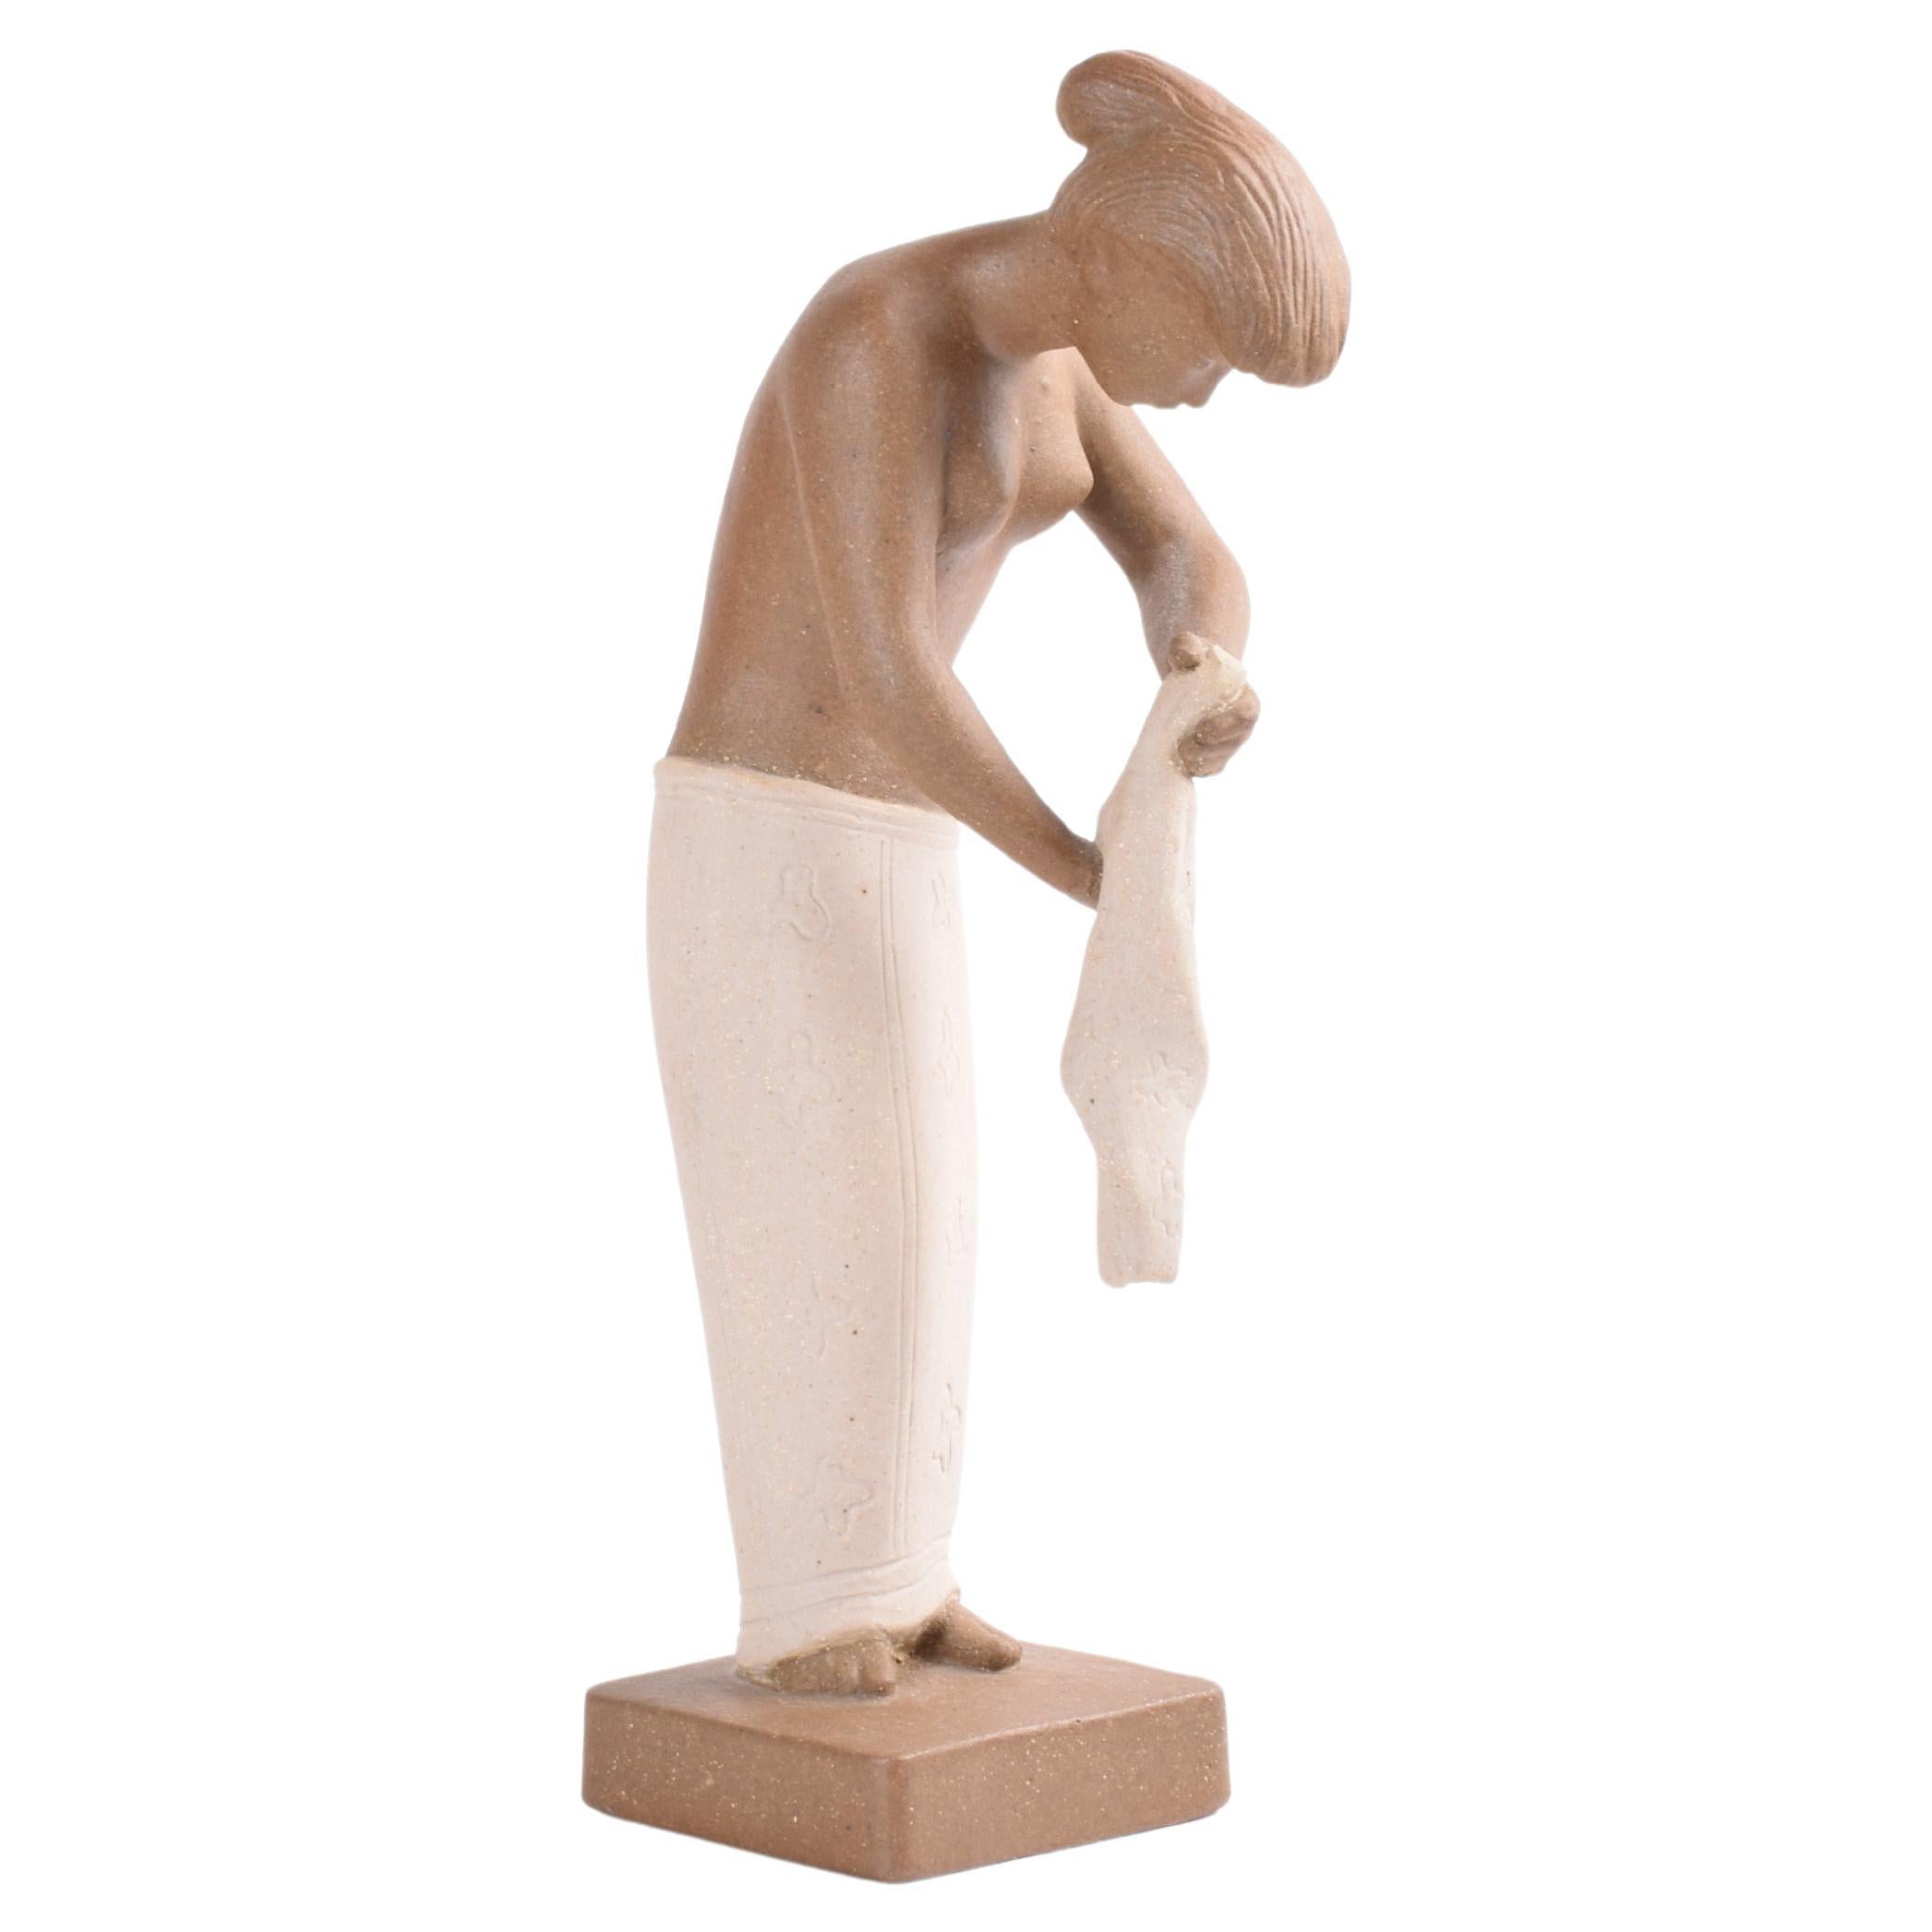 Johannes Hedegaard for Royal Copenhagen Figurine "Martha" Rare Version 21424 For Sale